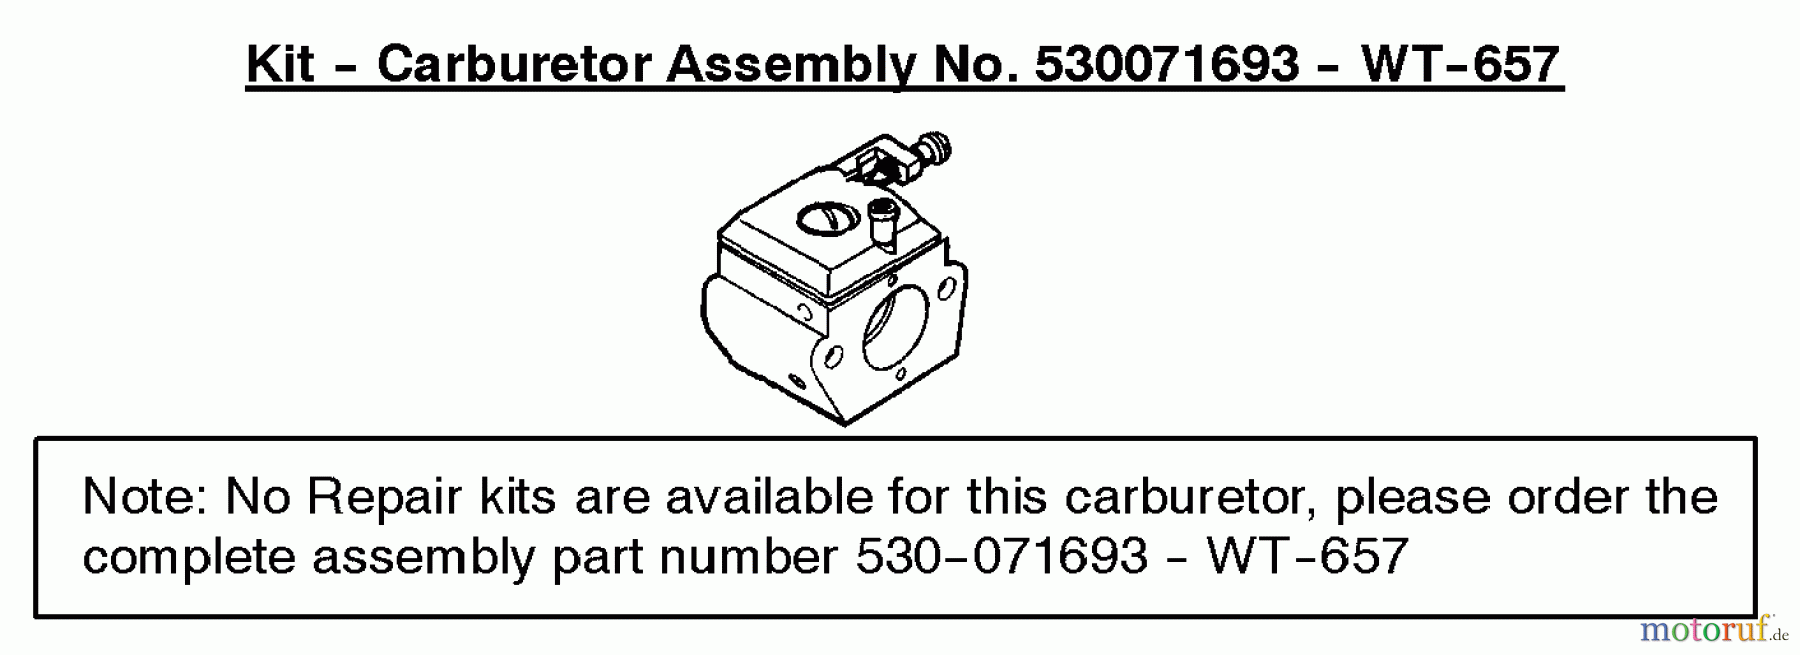  Poulan / Weed Eater Motorsägen PP295 (Type 2) - Poulan Pro Chainsaw Carburetor Assembly Kit - (WT-657) 530071693